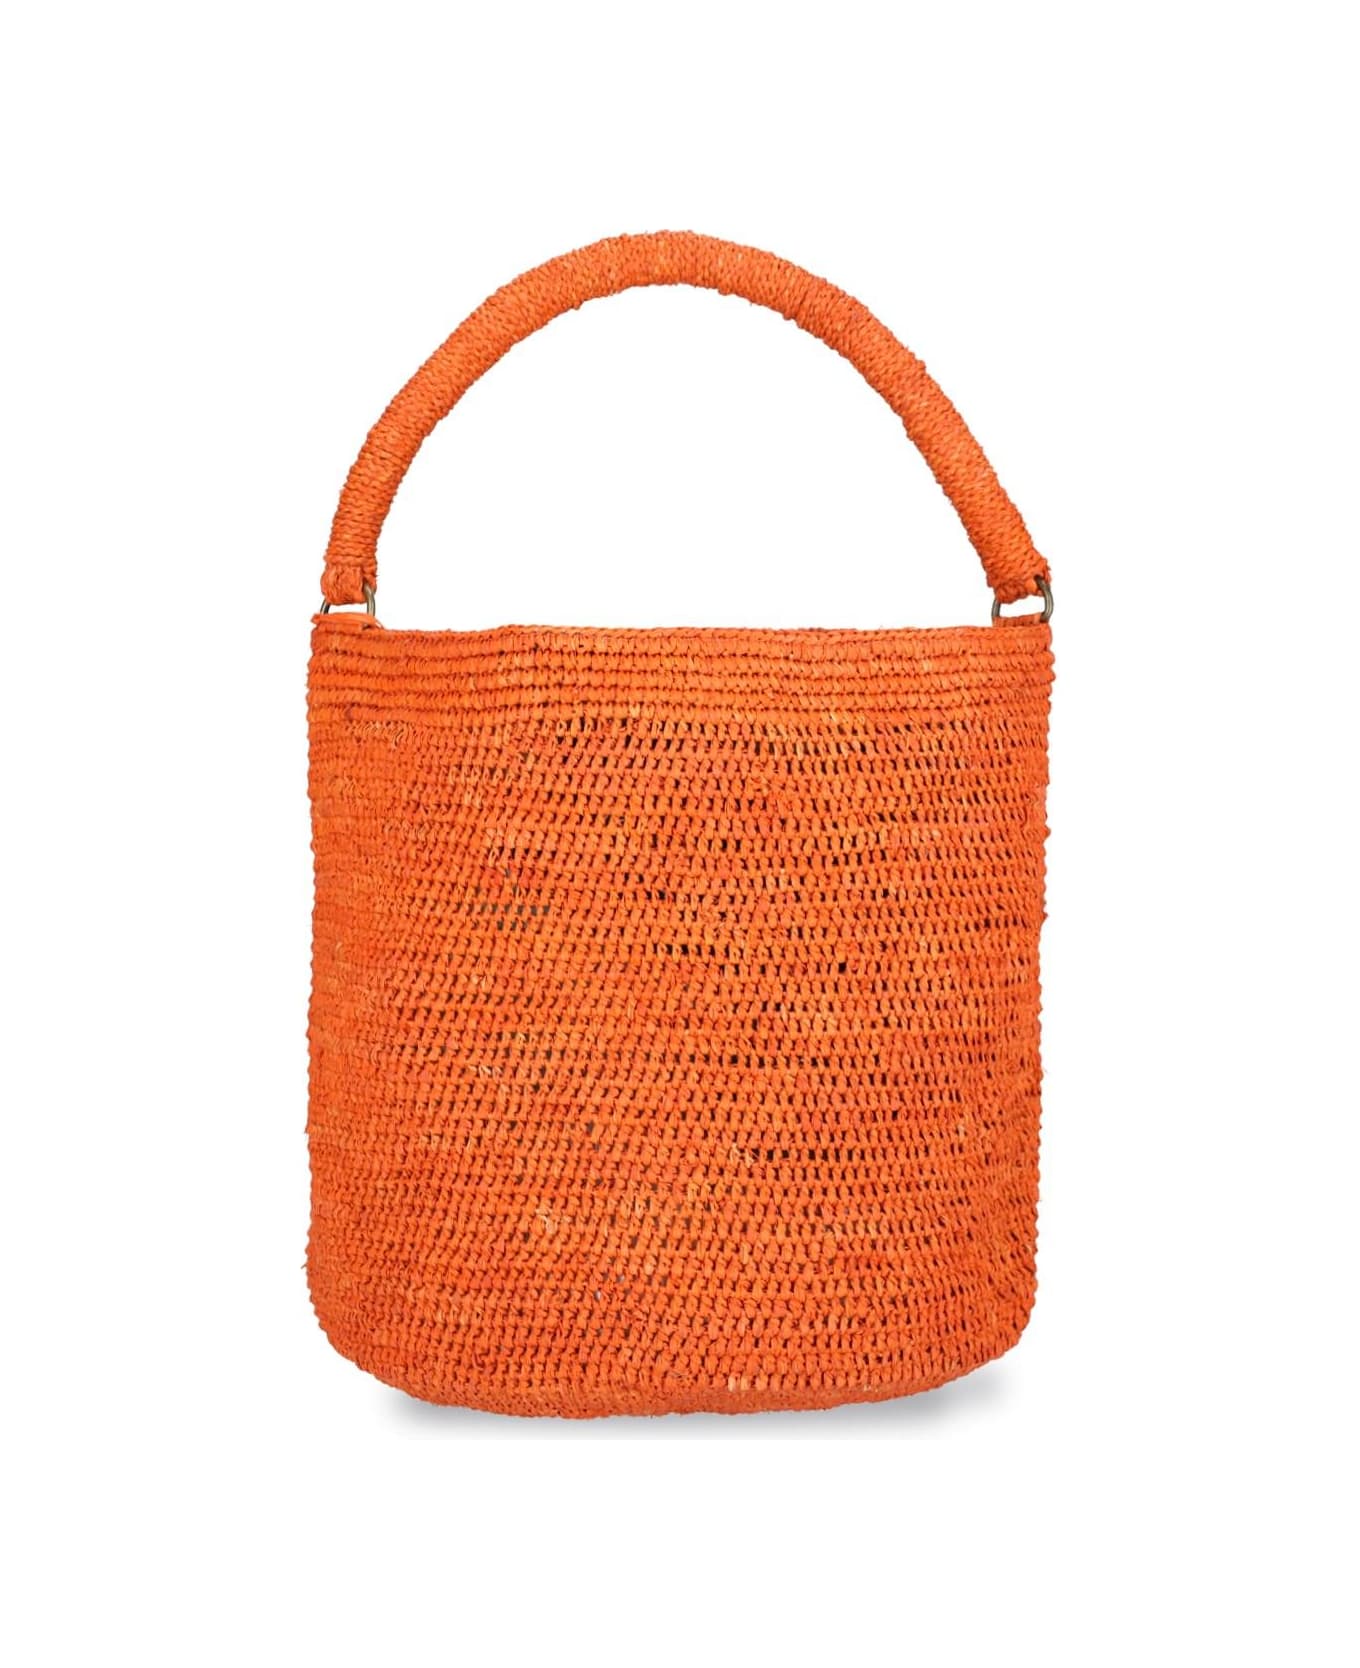 Ibeliv 'siny' Bucket Bag - Orange